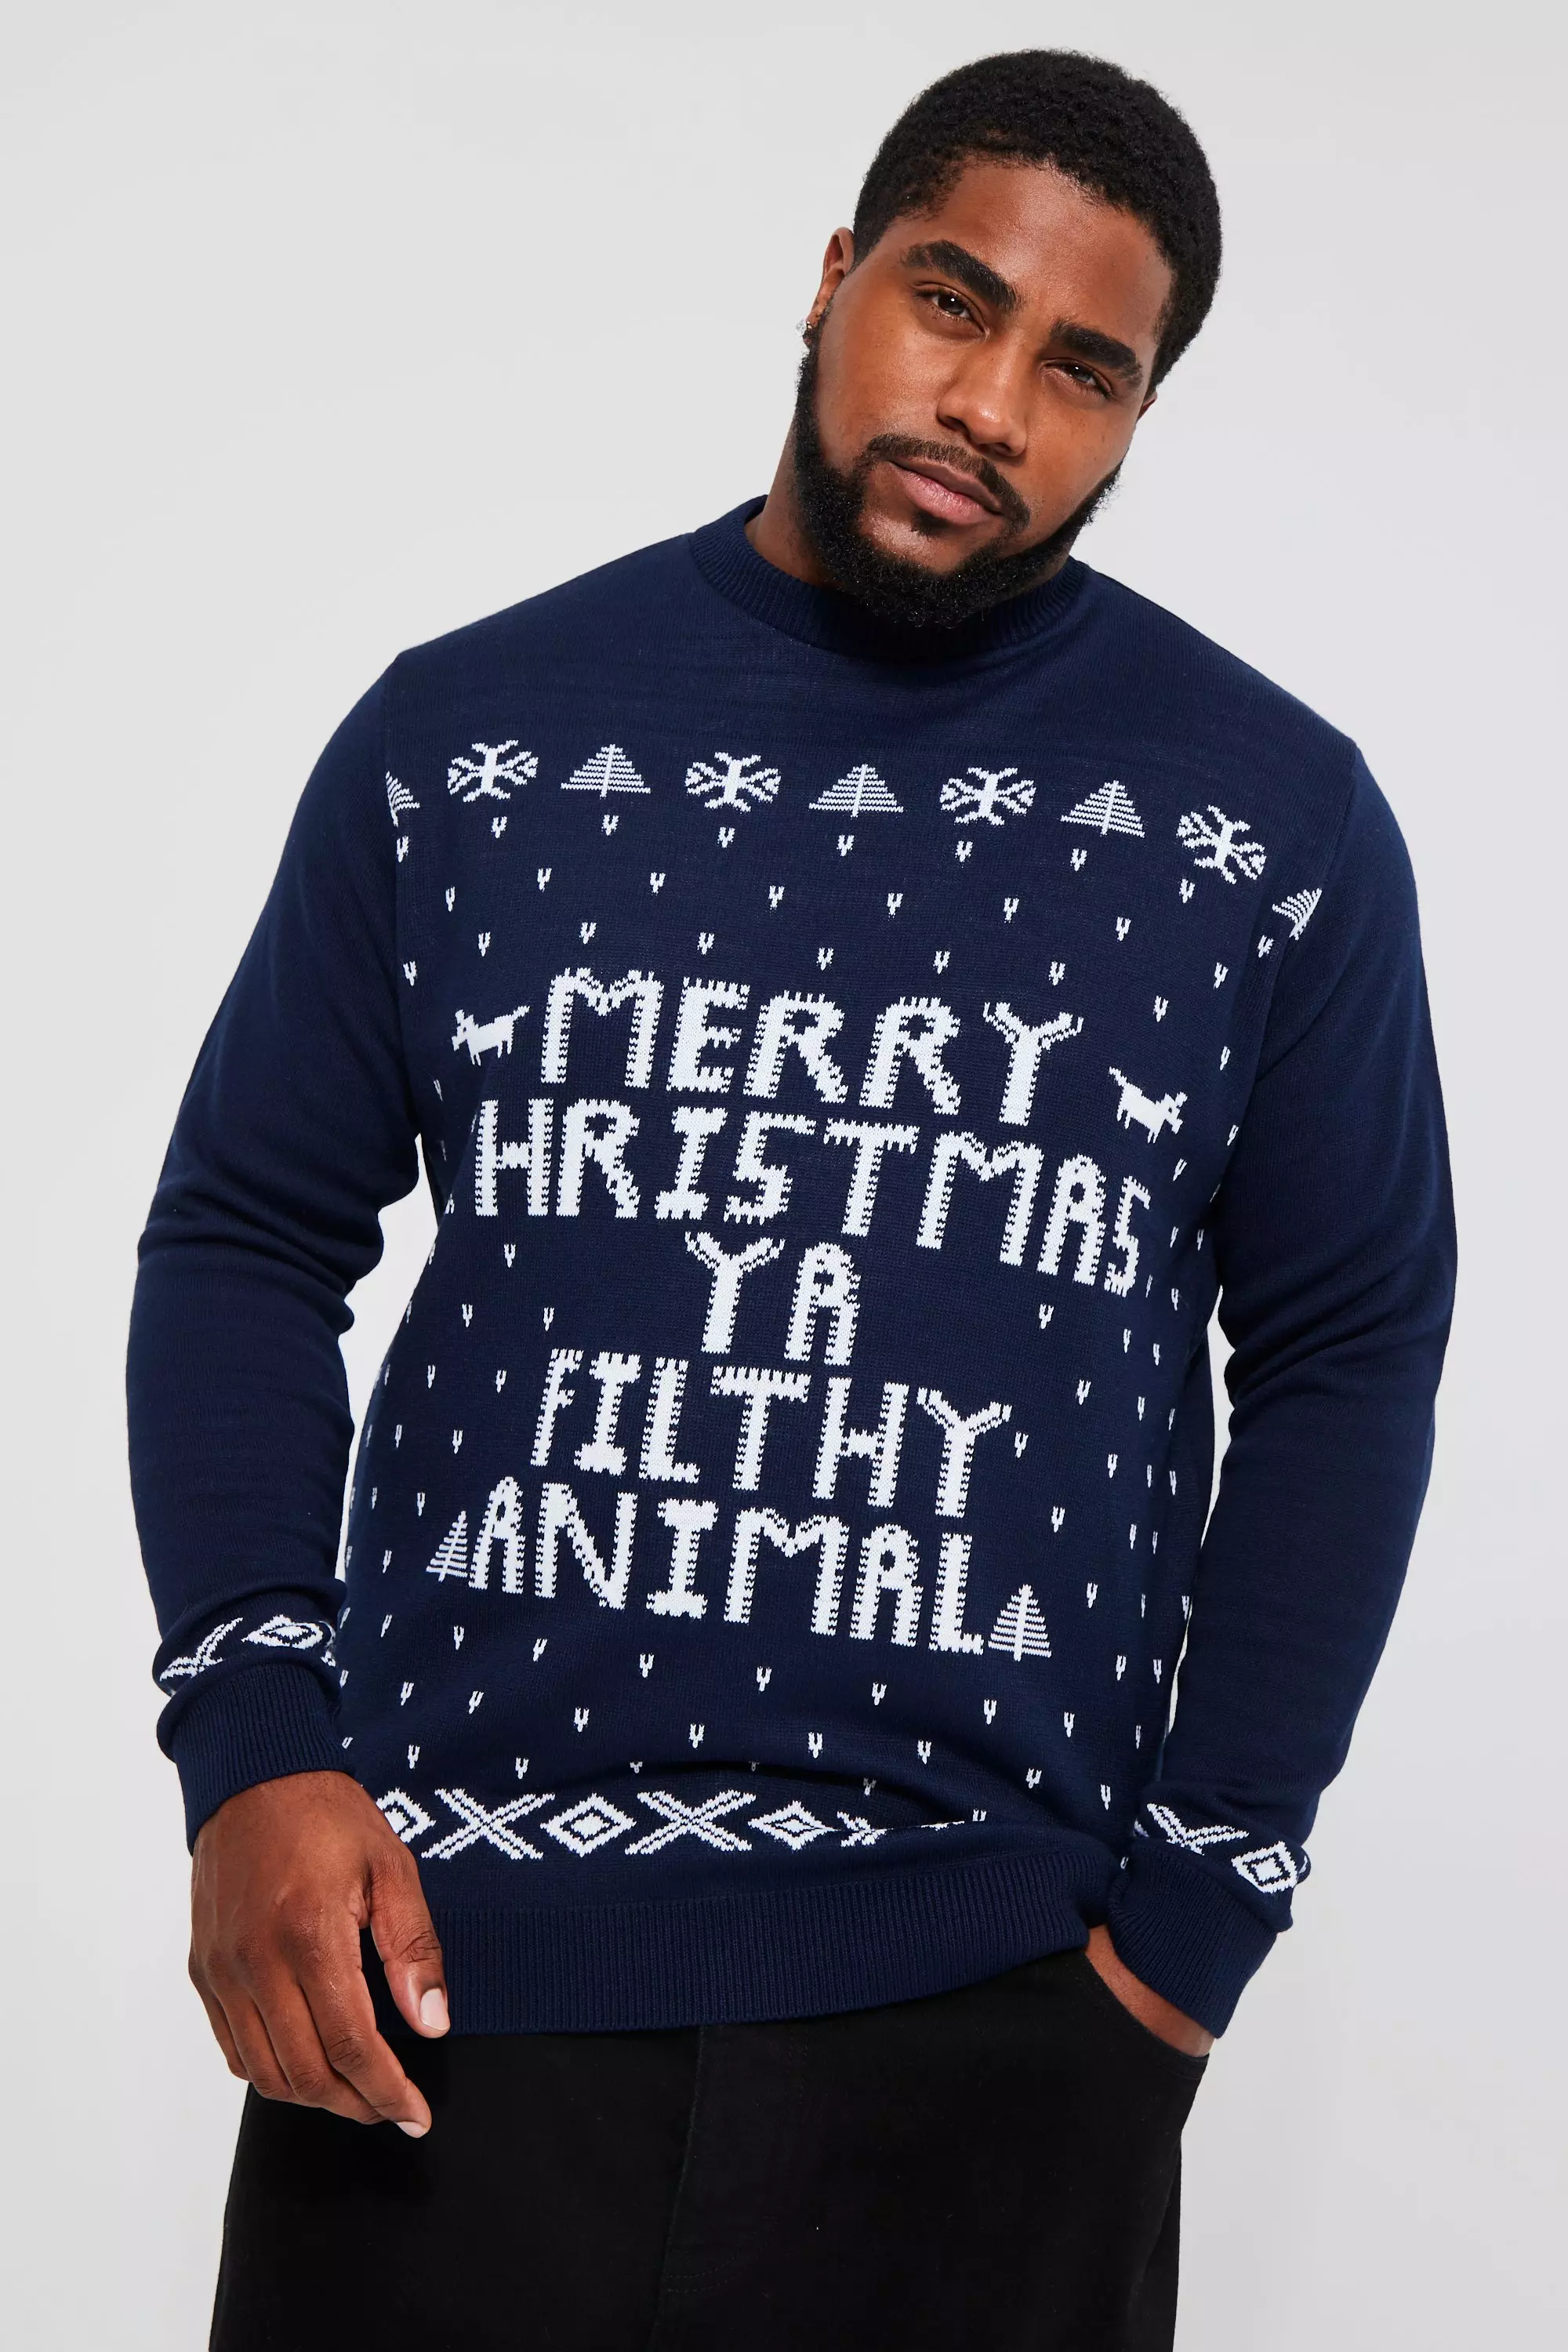 Navy Plus Ya Filthy Animal Christmas Sweater